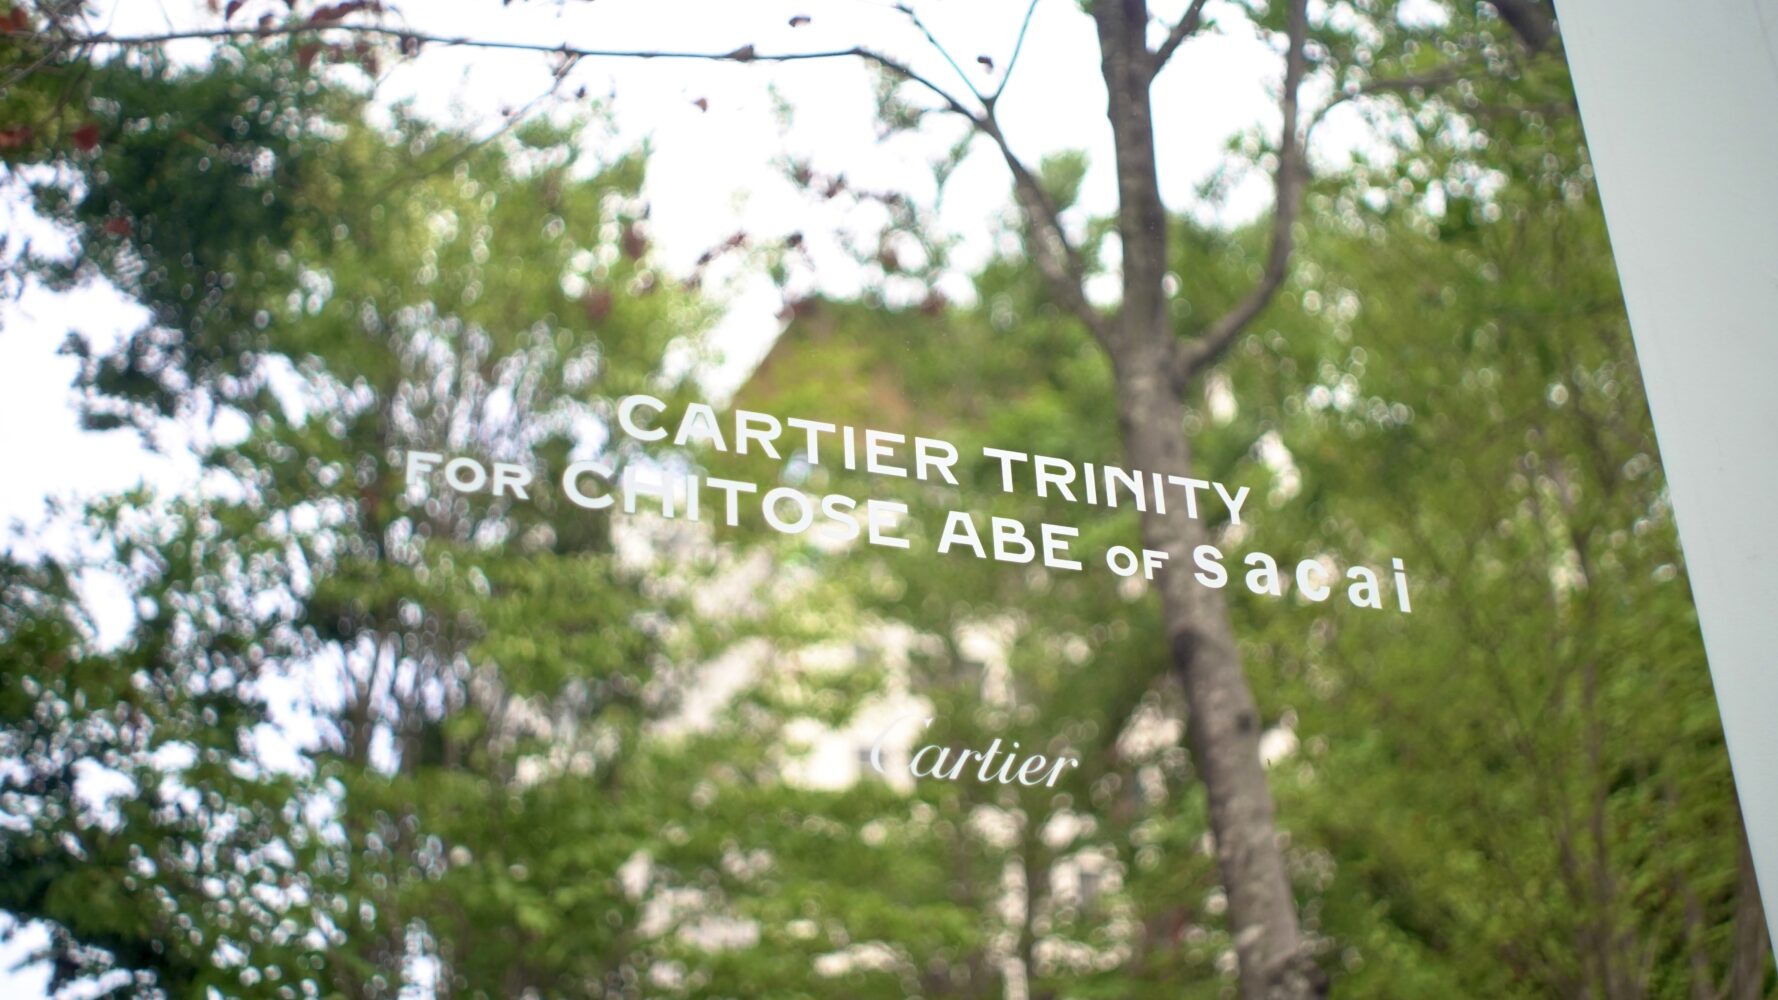 Cartier Trinity for Chitose Abe Of Sacai 事例画像3